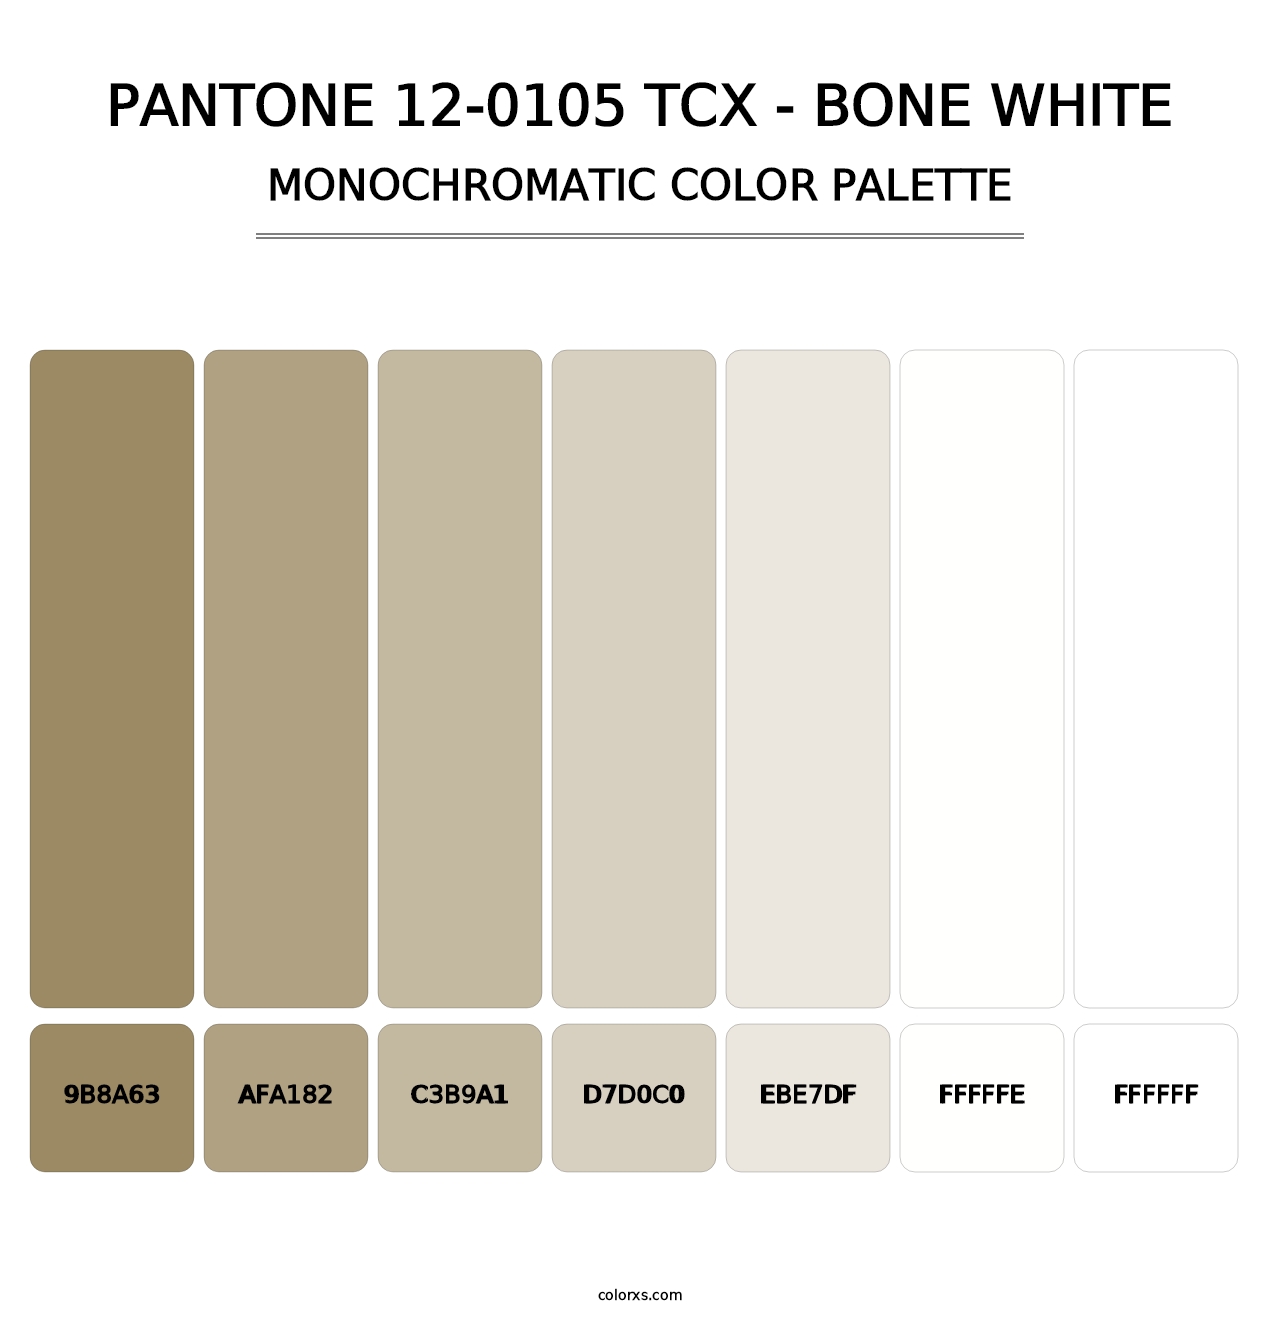 PANTONE 12-0105 TCX - Bone White - Monochromatic Color Palette